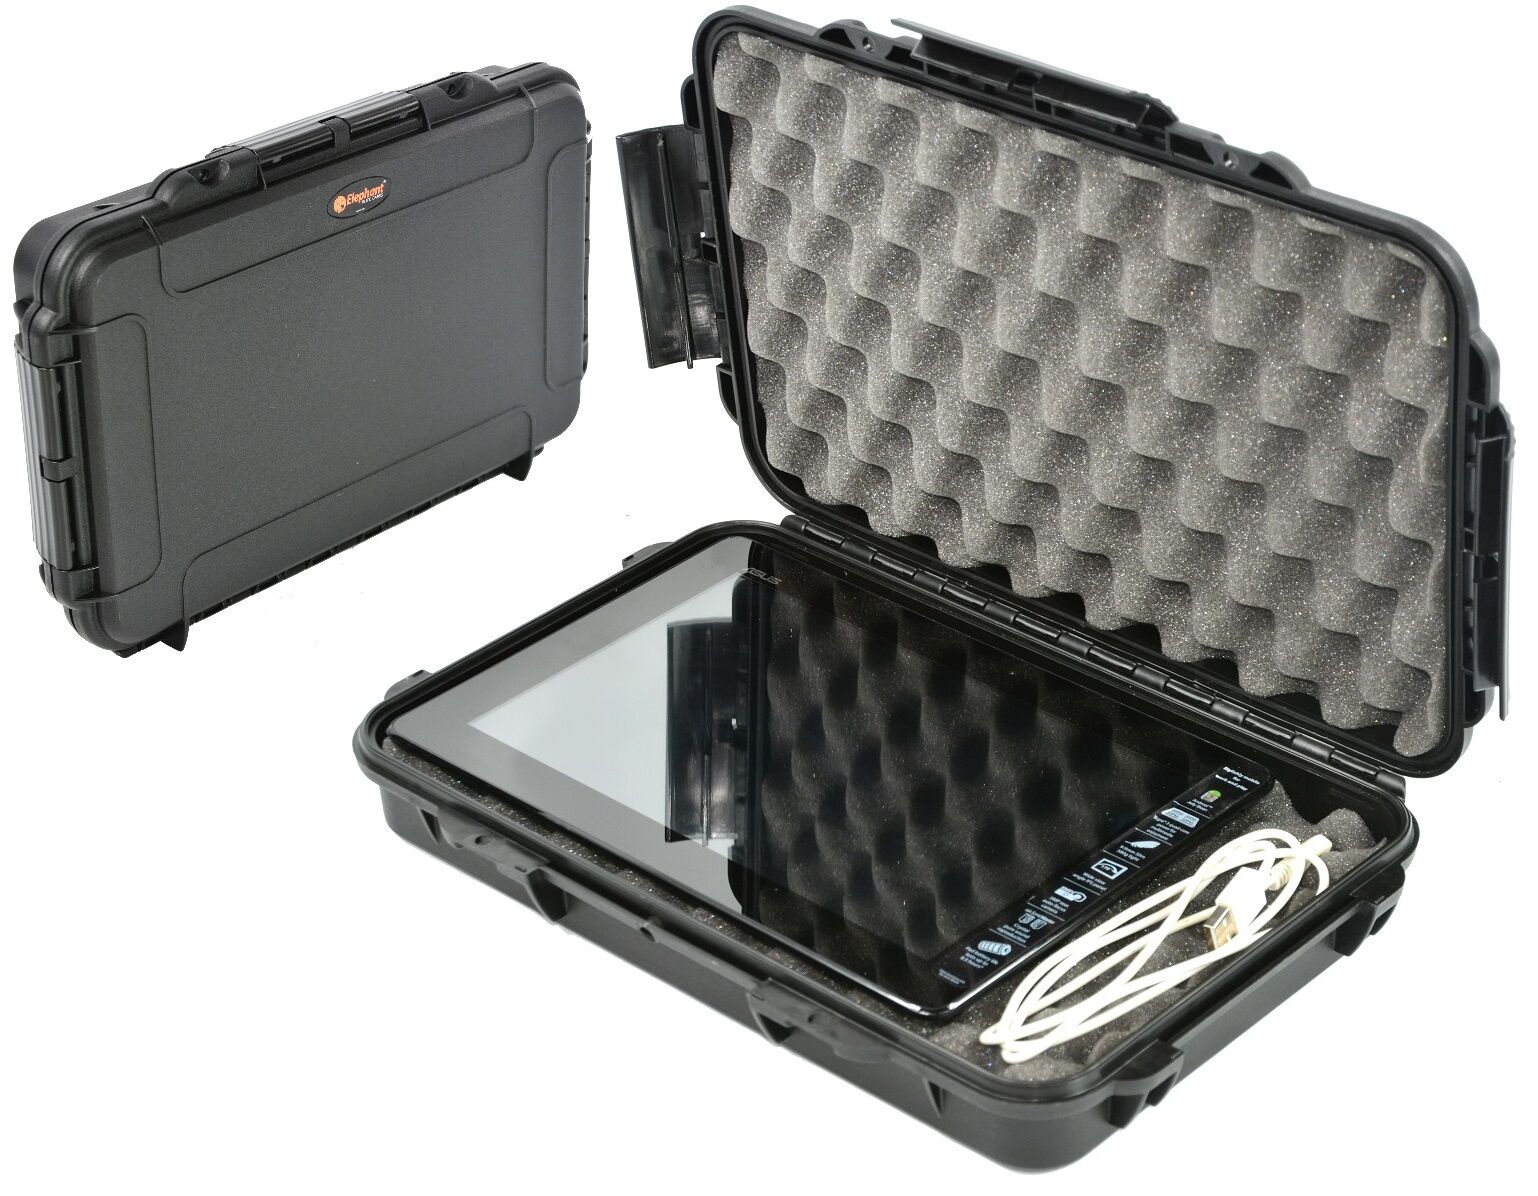 Waterproof Tablet Case,E book hard Case for iPad, Fire HD 10/8,Galaxy Tab S2 +